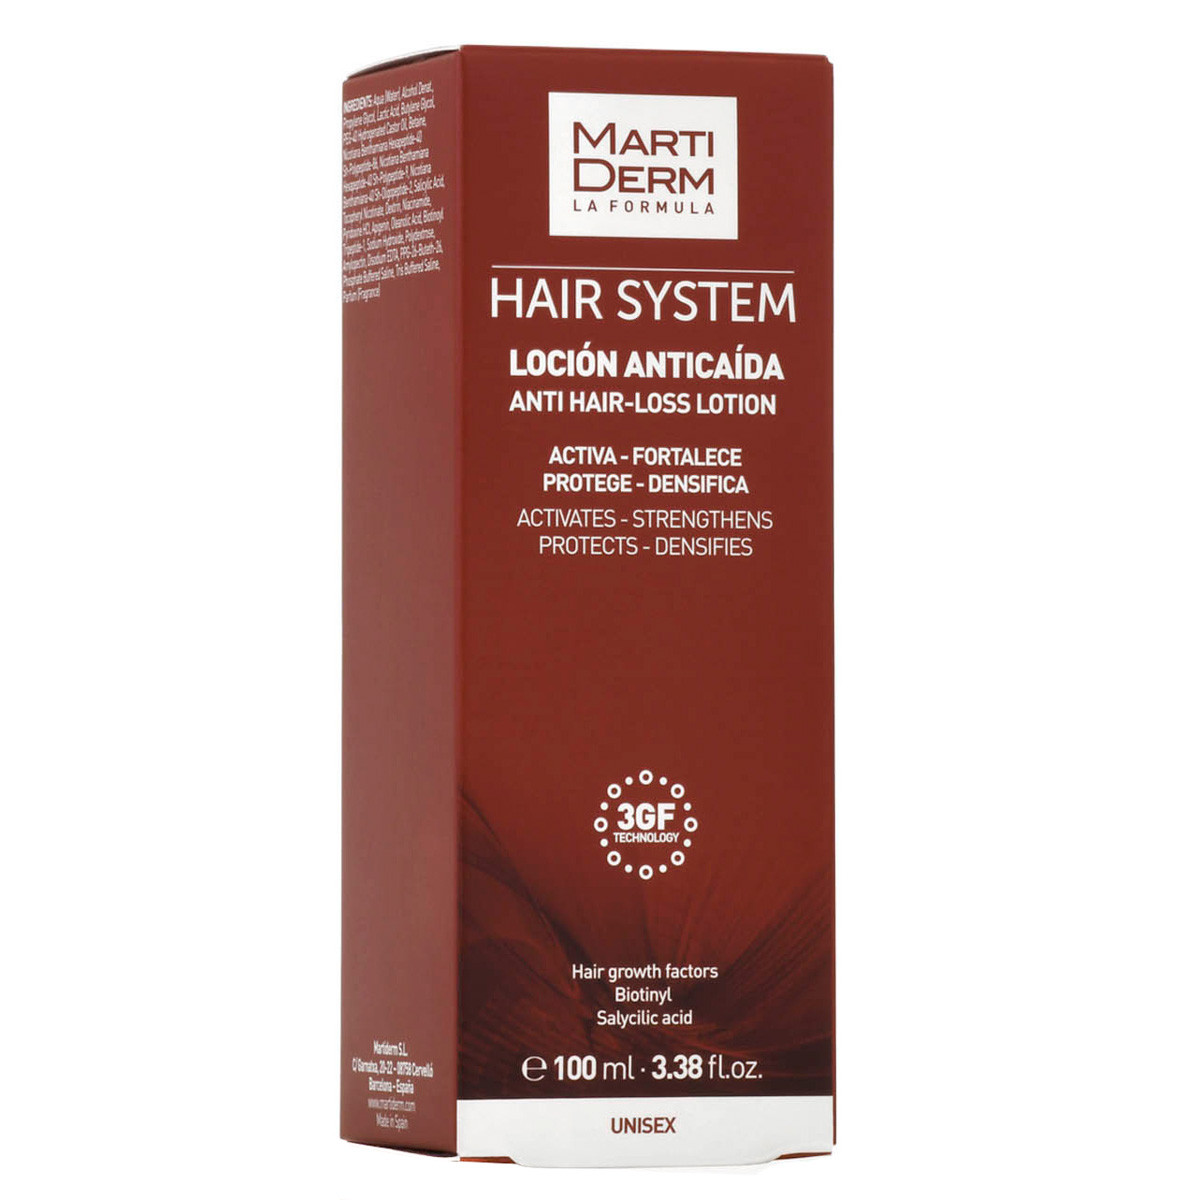 Imagen de MartiDerm Hair System Loción Anticaída 100 ml